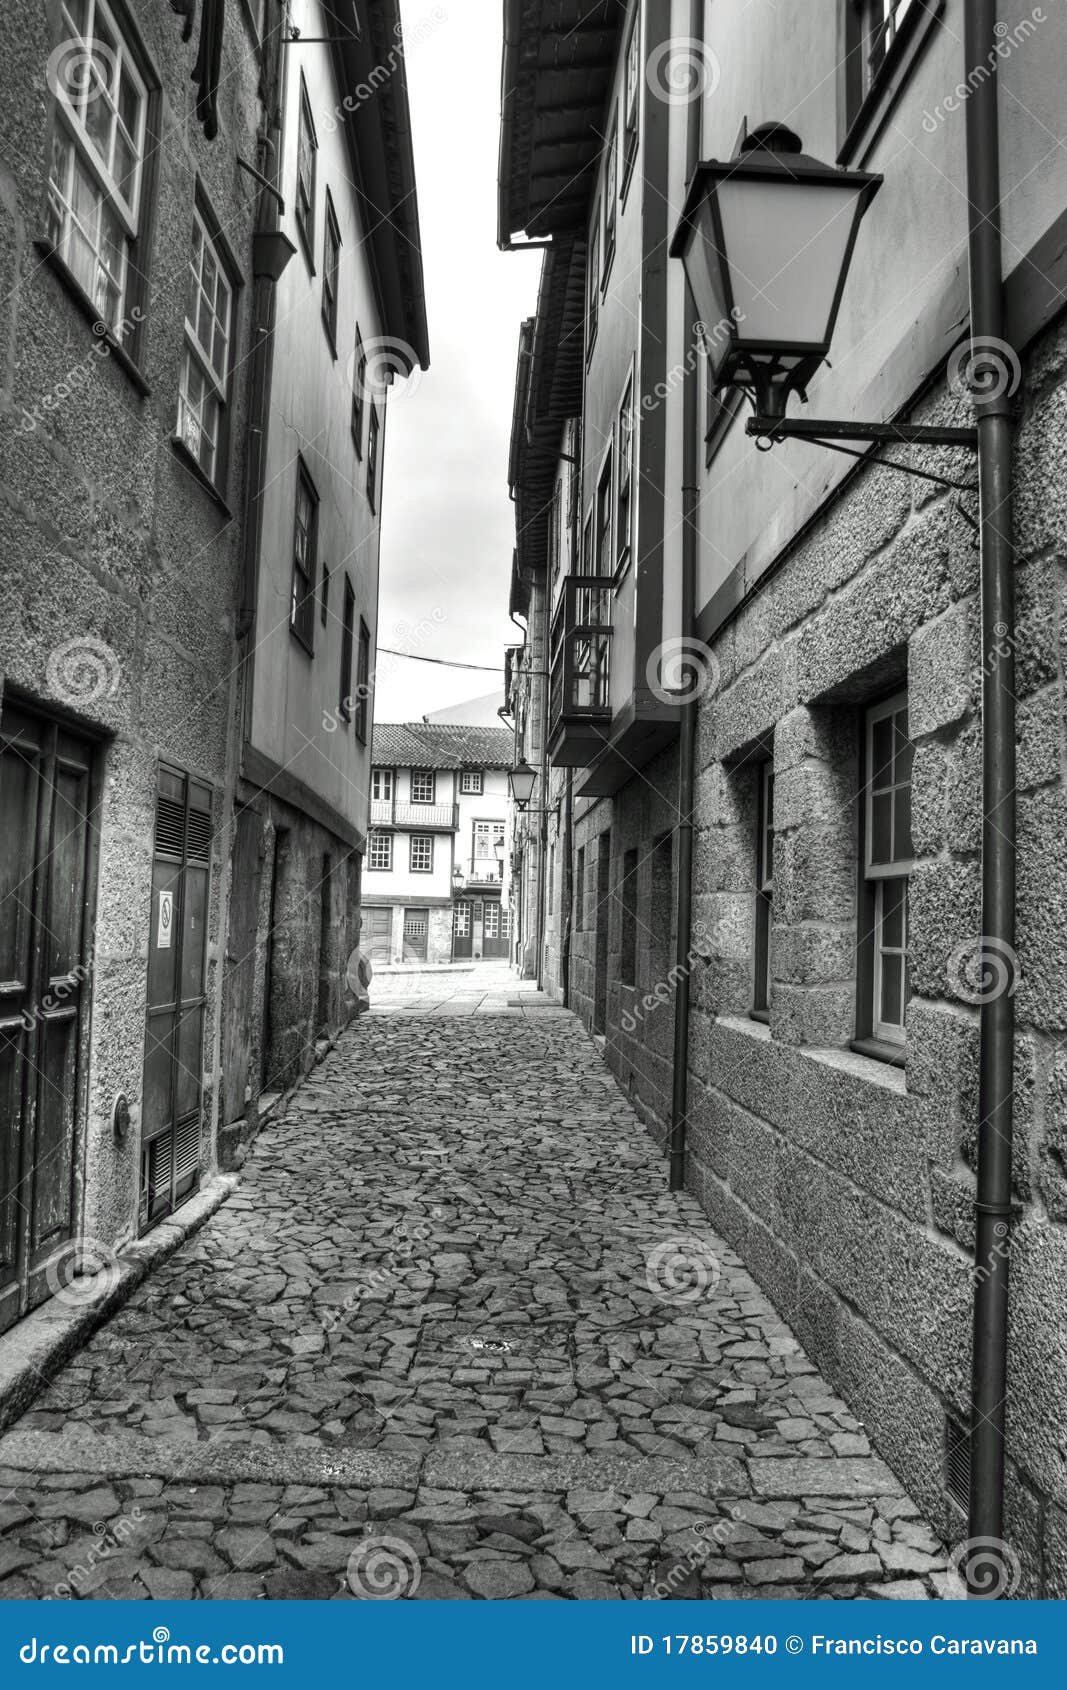 guimaraes narrow street, portugal